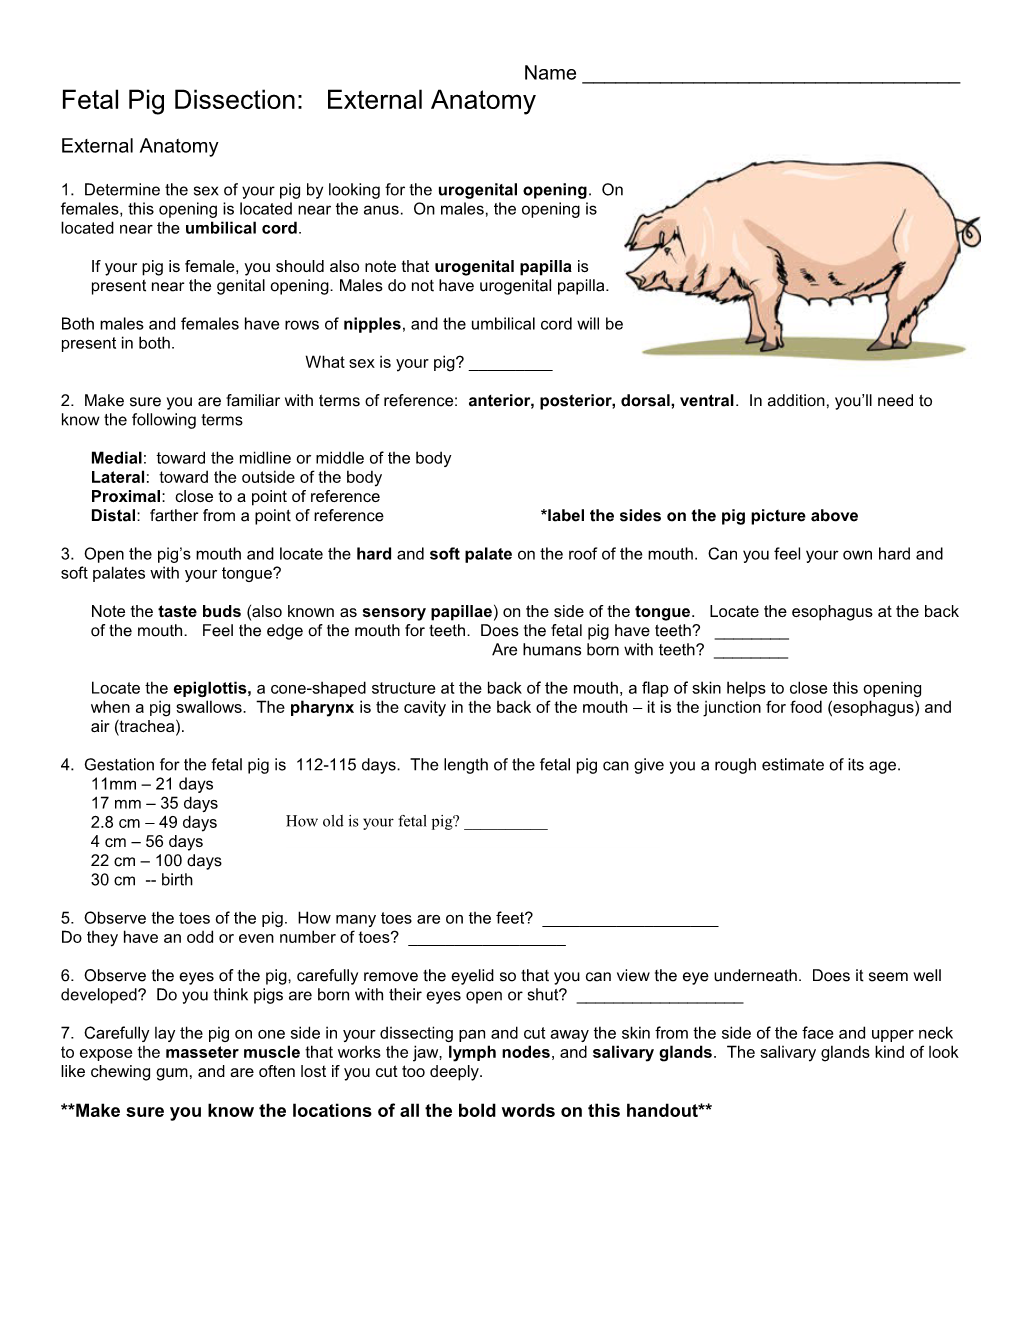 Fetal Pig Dissection: External Anatomy